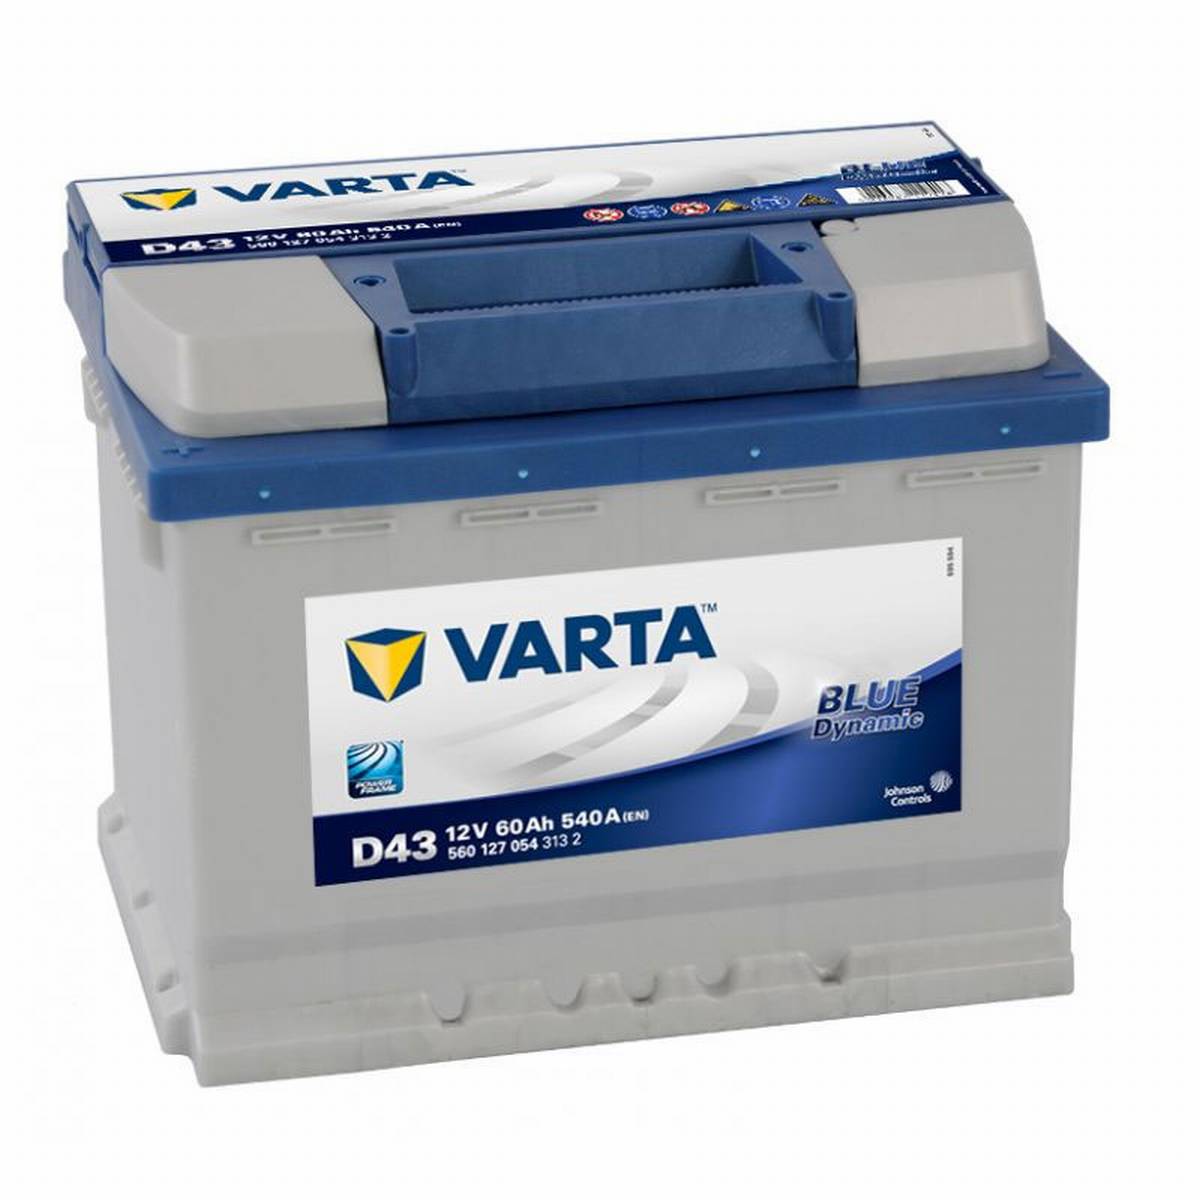 VARTA D43 Blue Dynamic 12V 60Ah 540A Autobatterie 560 127 054